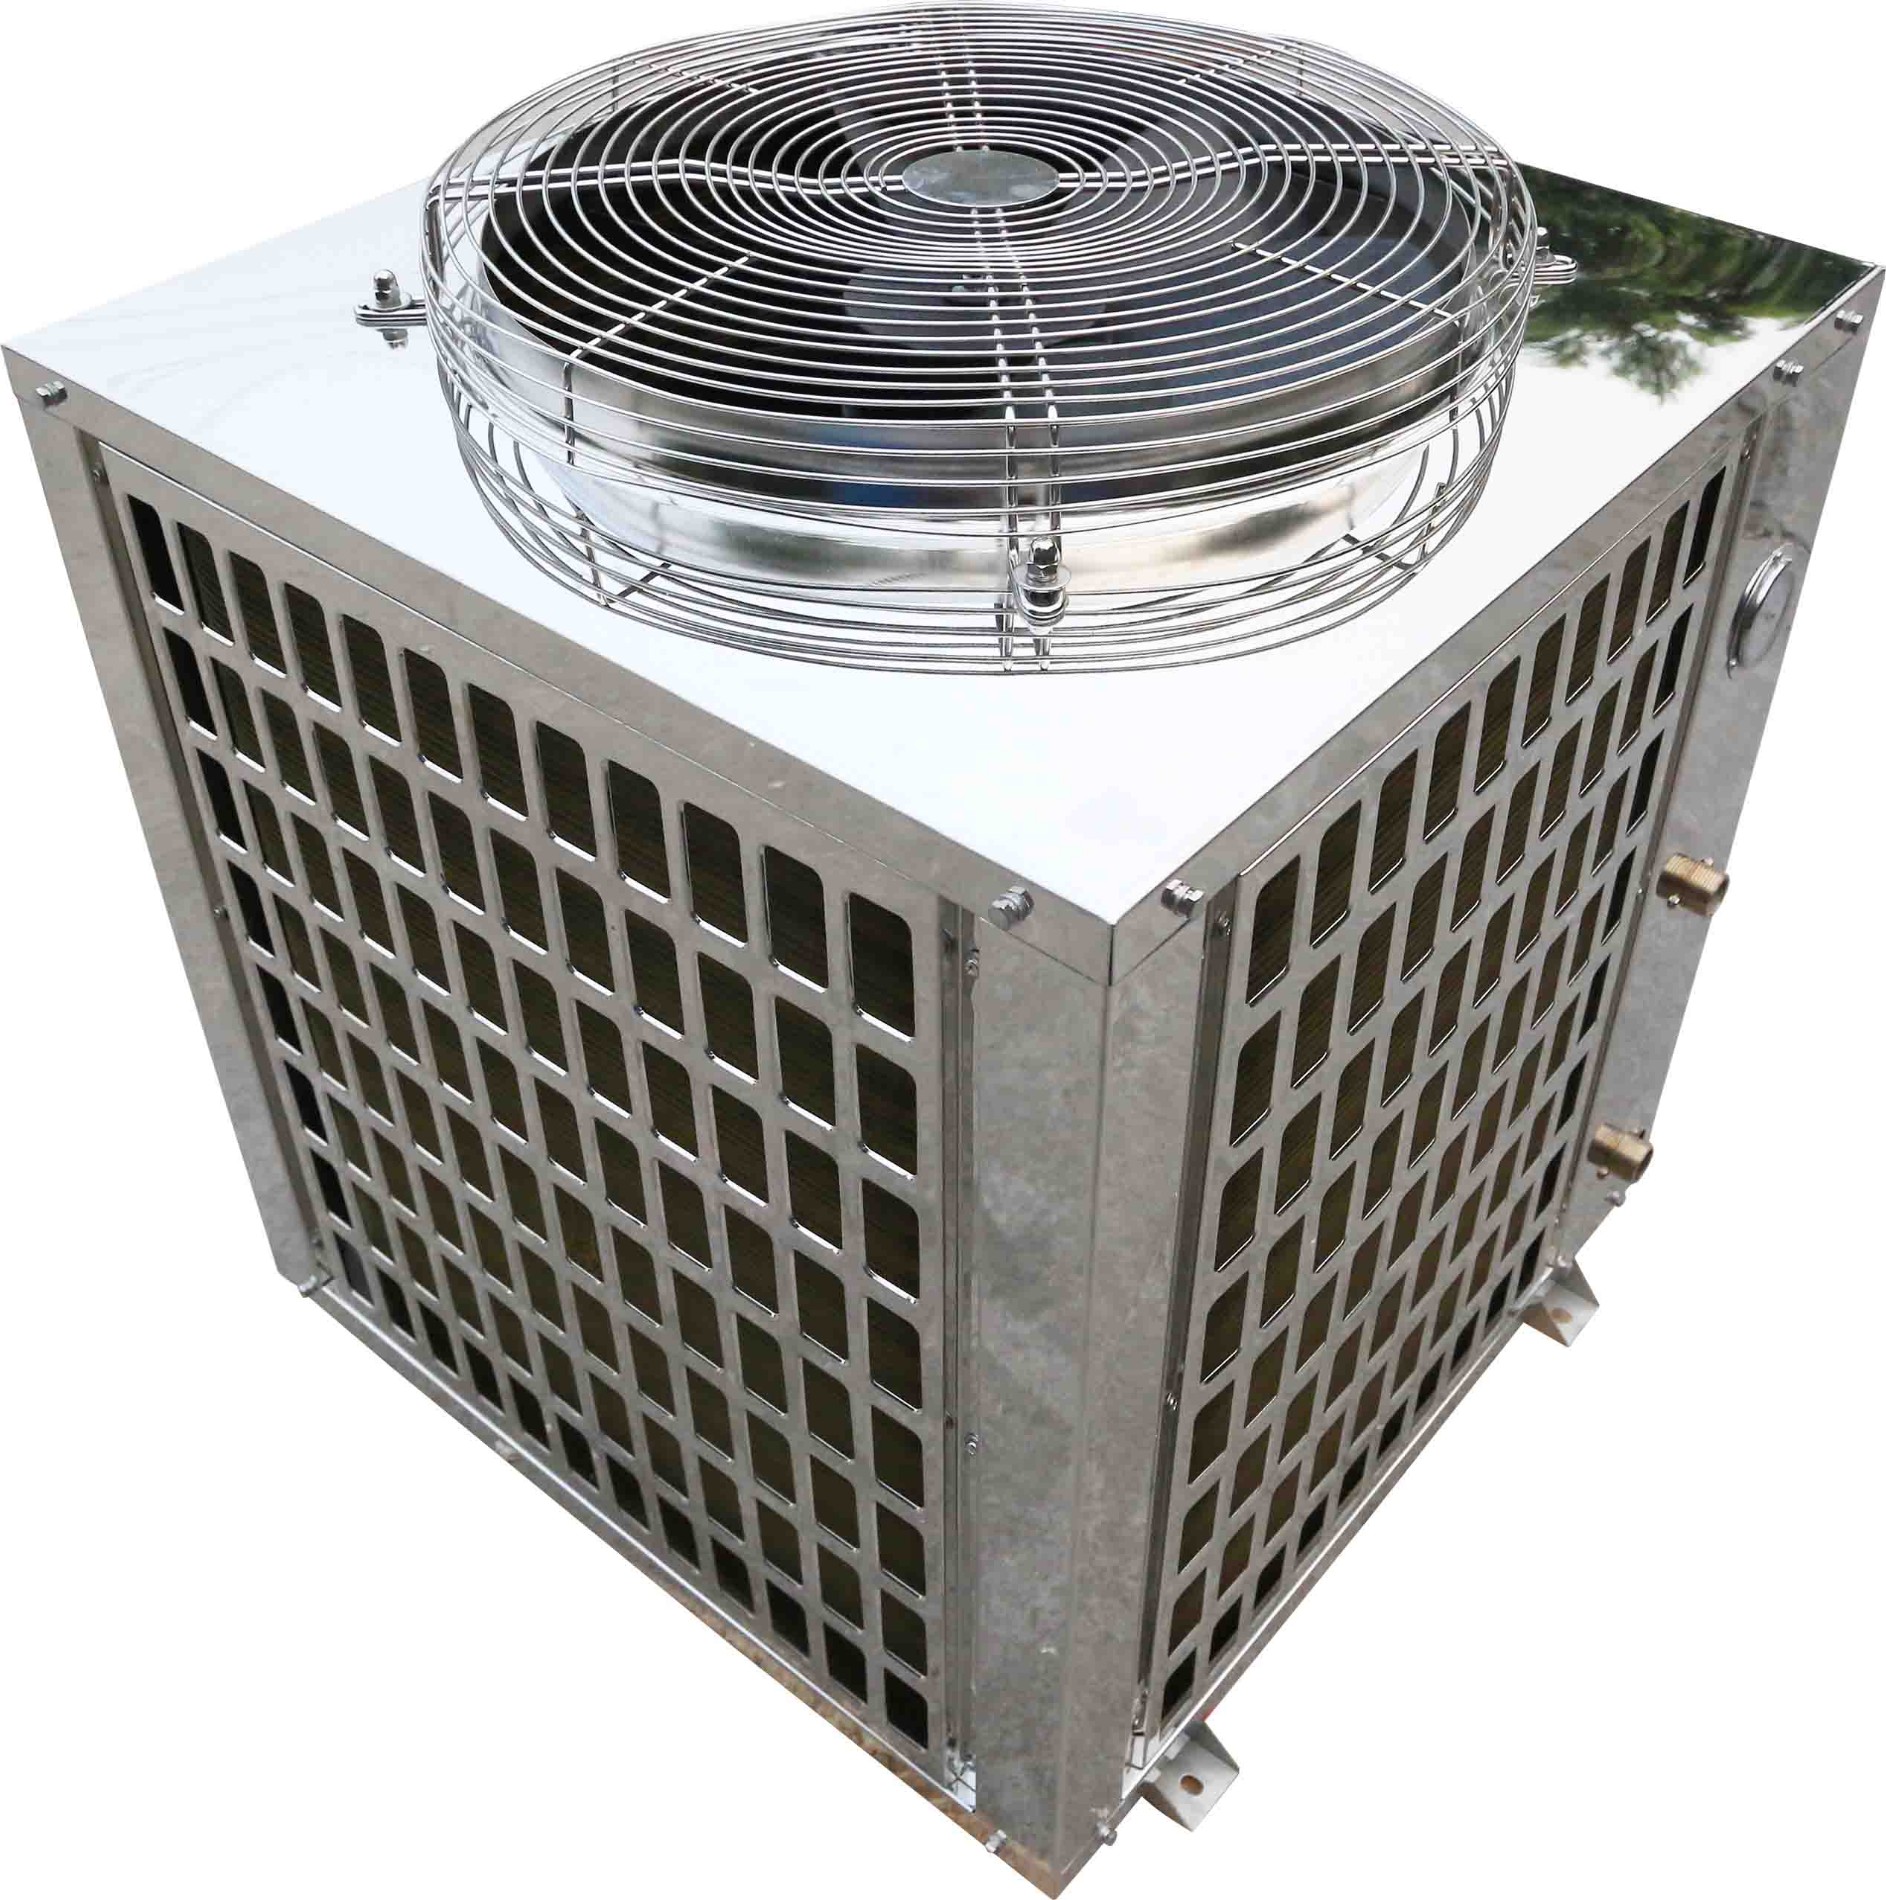 High quality energy saving techology  Low Temp Heater Quotes,China heat pump equipment Low Temp Heater Factory, pump equipmentLow Temp Heater Purchasing